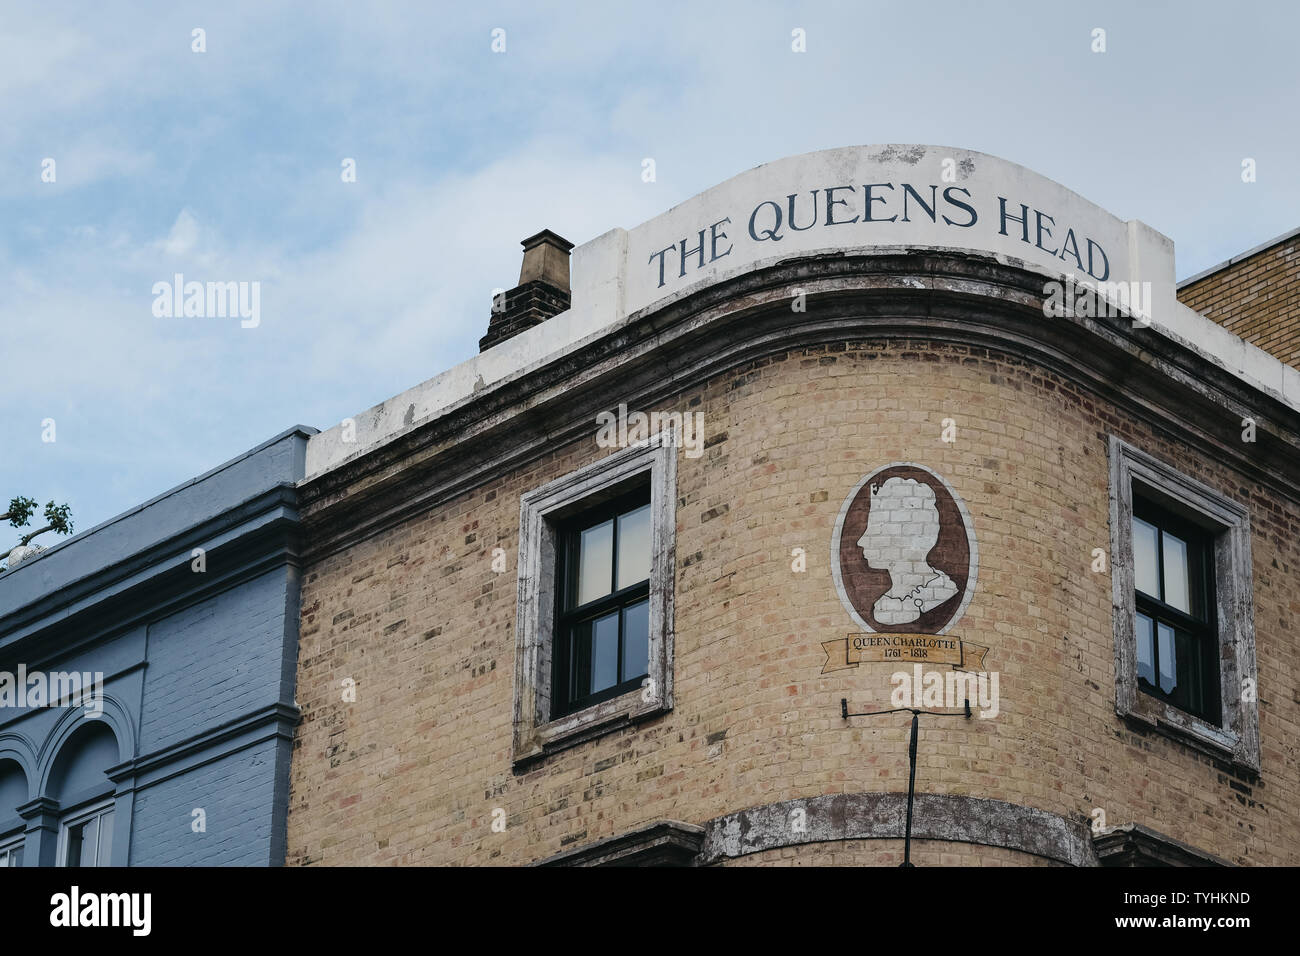 Queens Head Pub London Stock Photos & Queens Head Pub ...